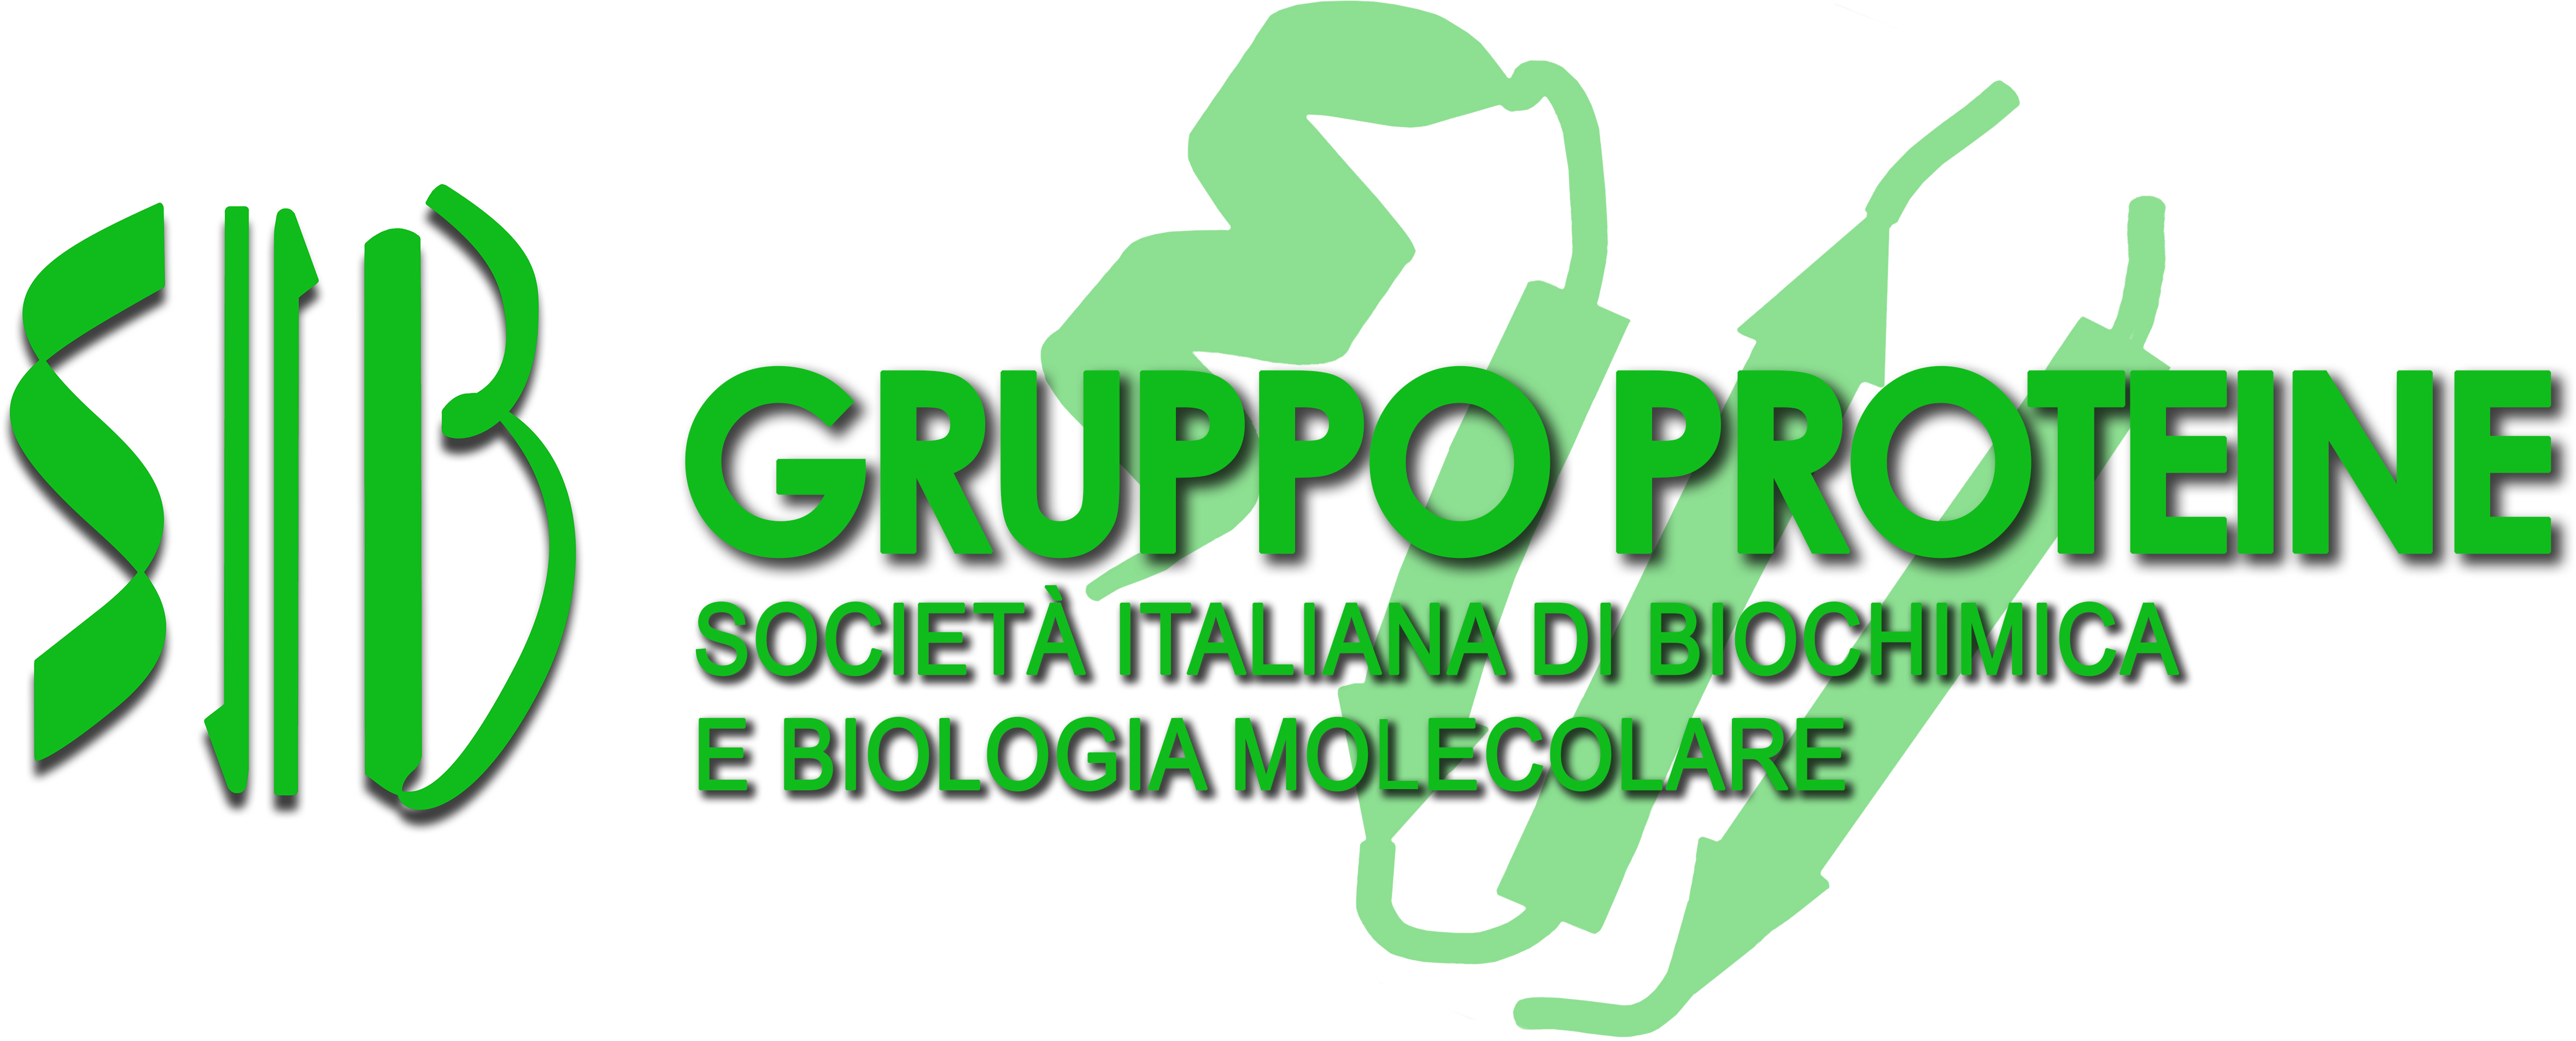 SIB Proteine logo